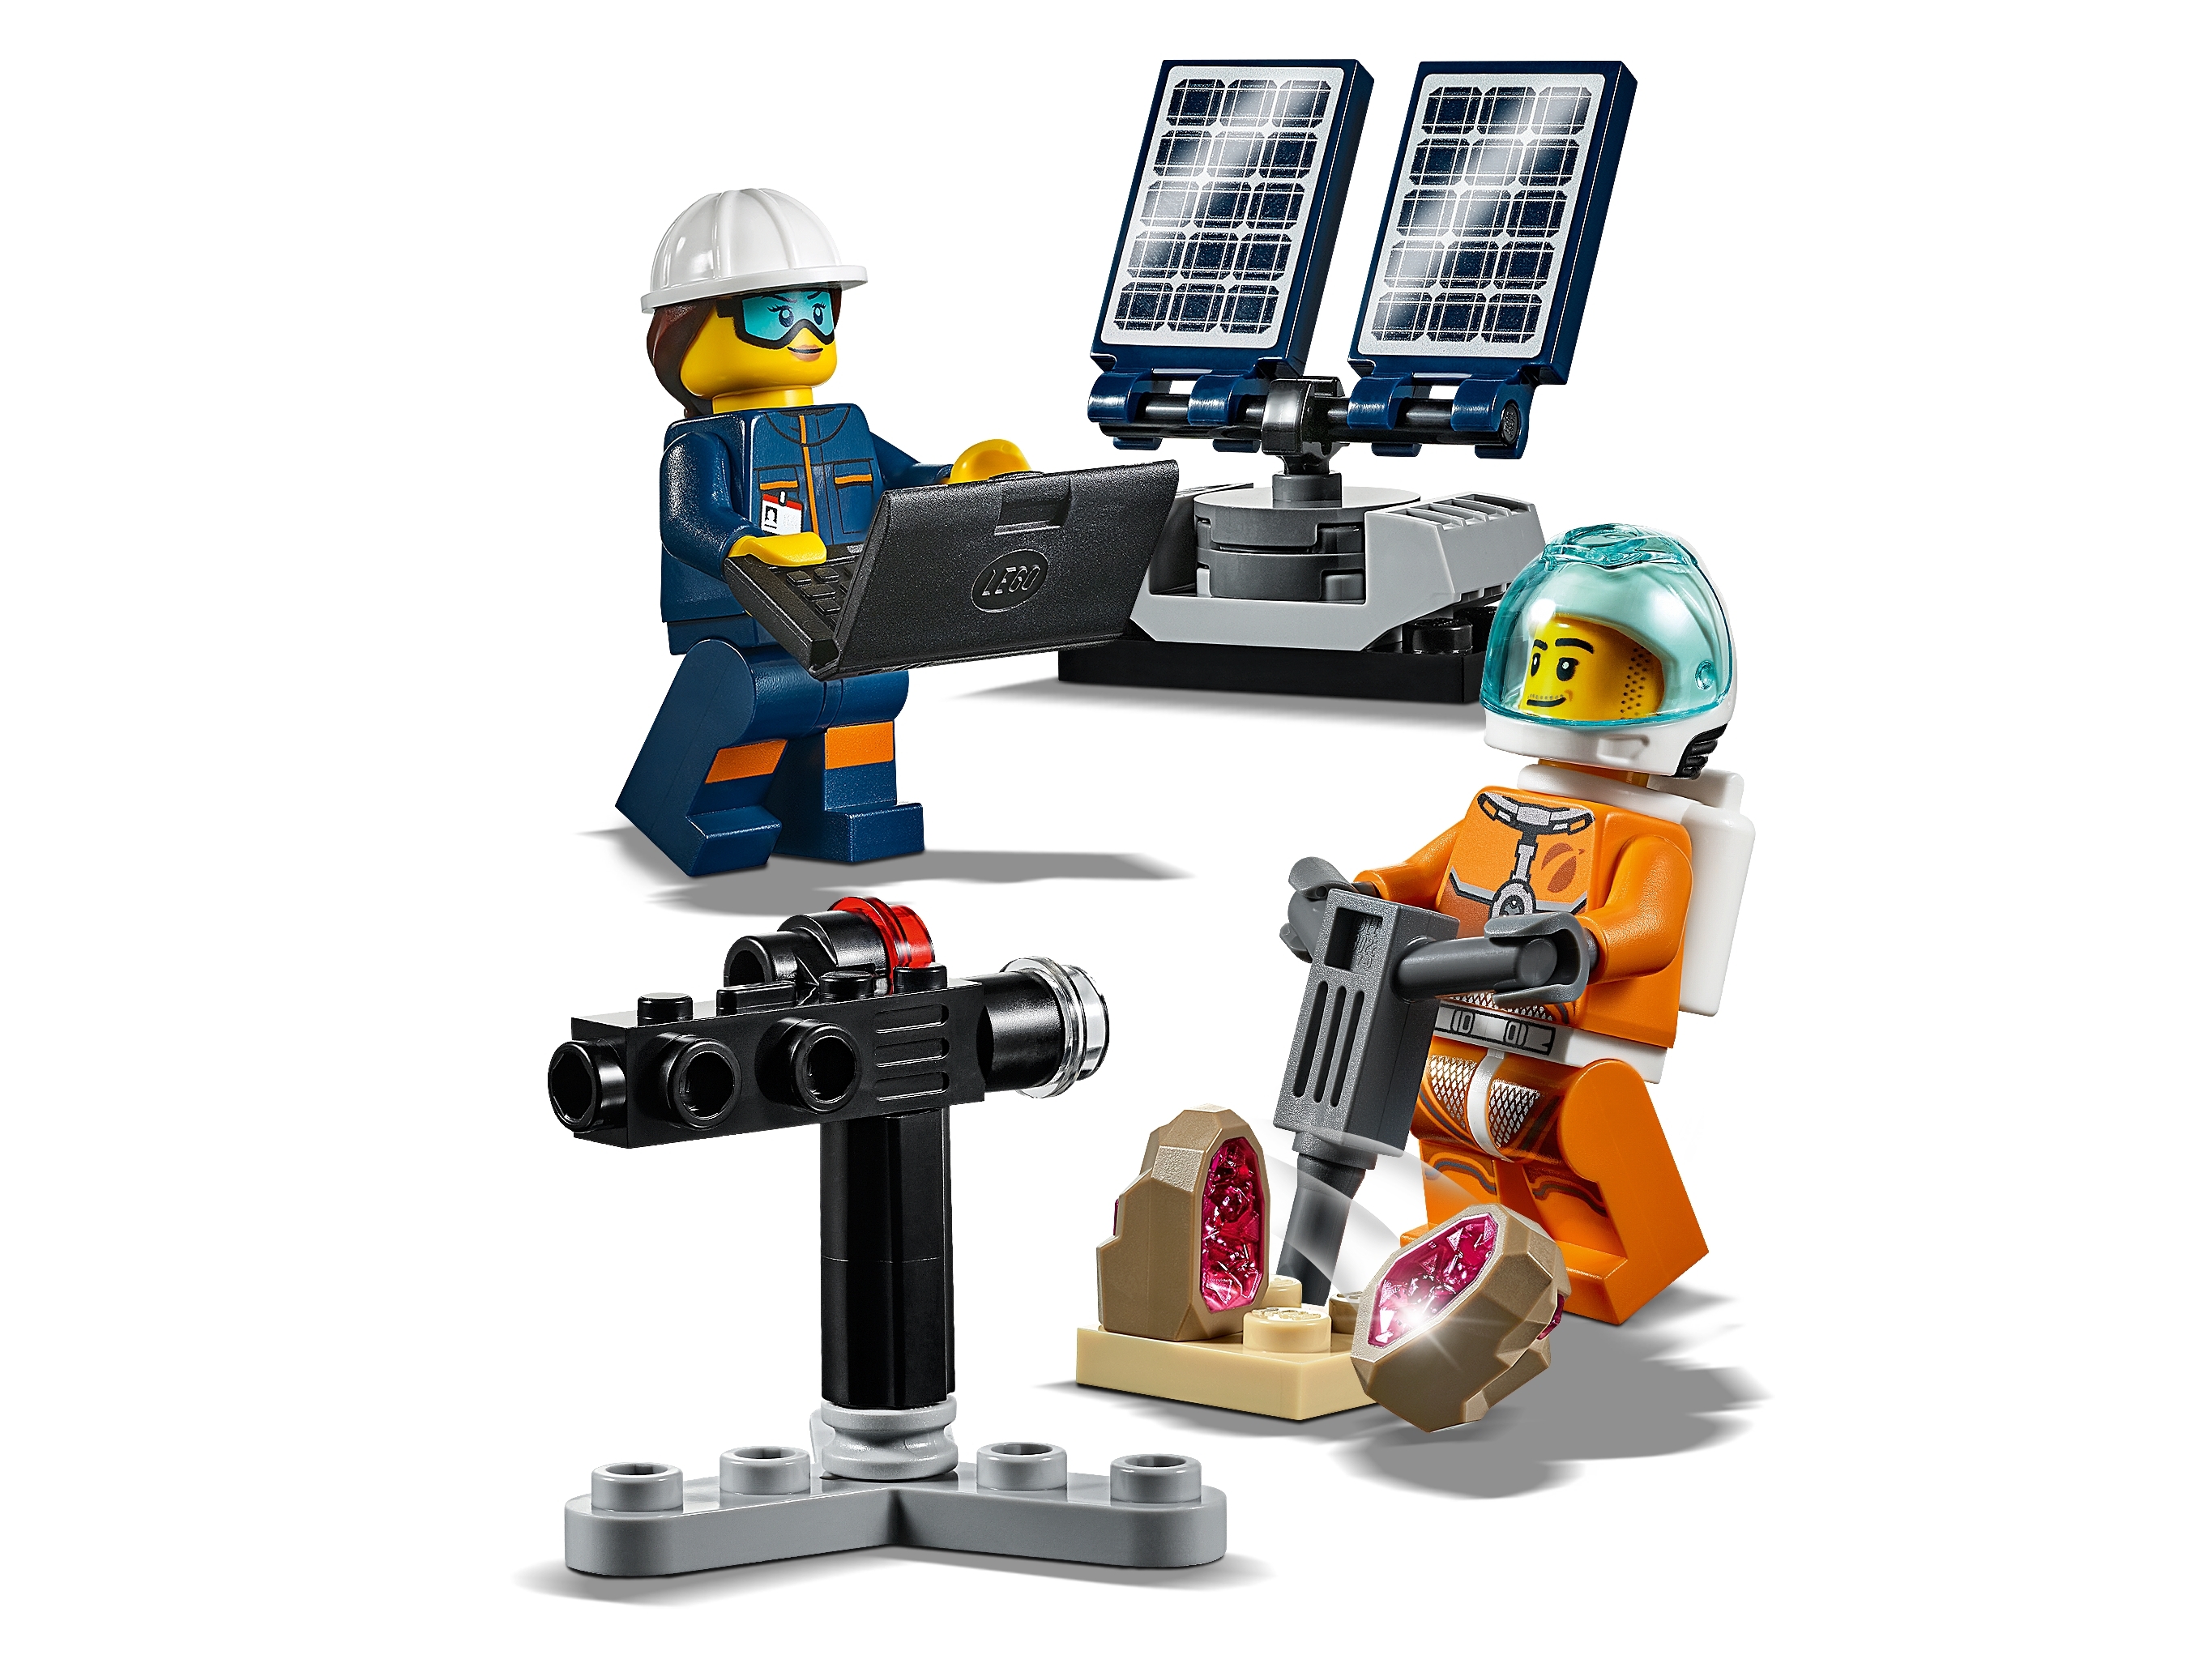 LEGO ® City 60227 60226 60225 Rover-Testfahrt Mond Raumstation Mars  N8/19 